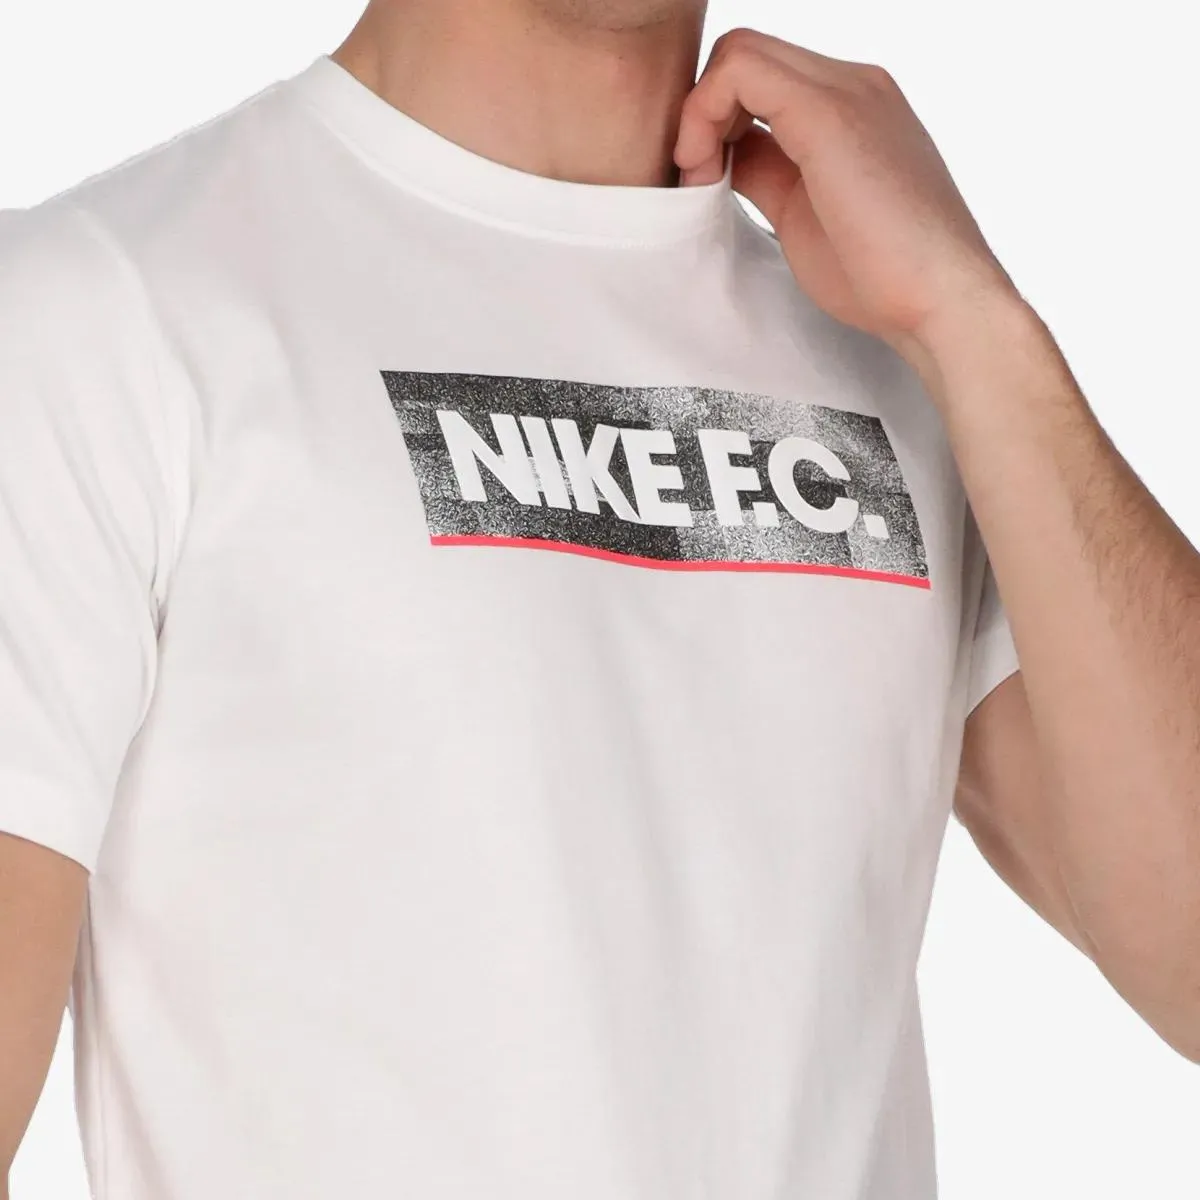 Nike T-shirt F.C. 